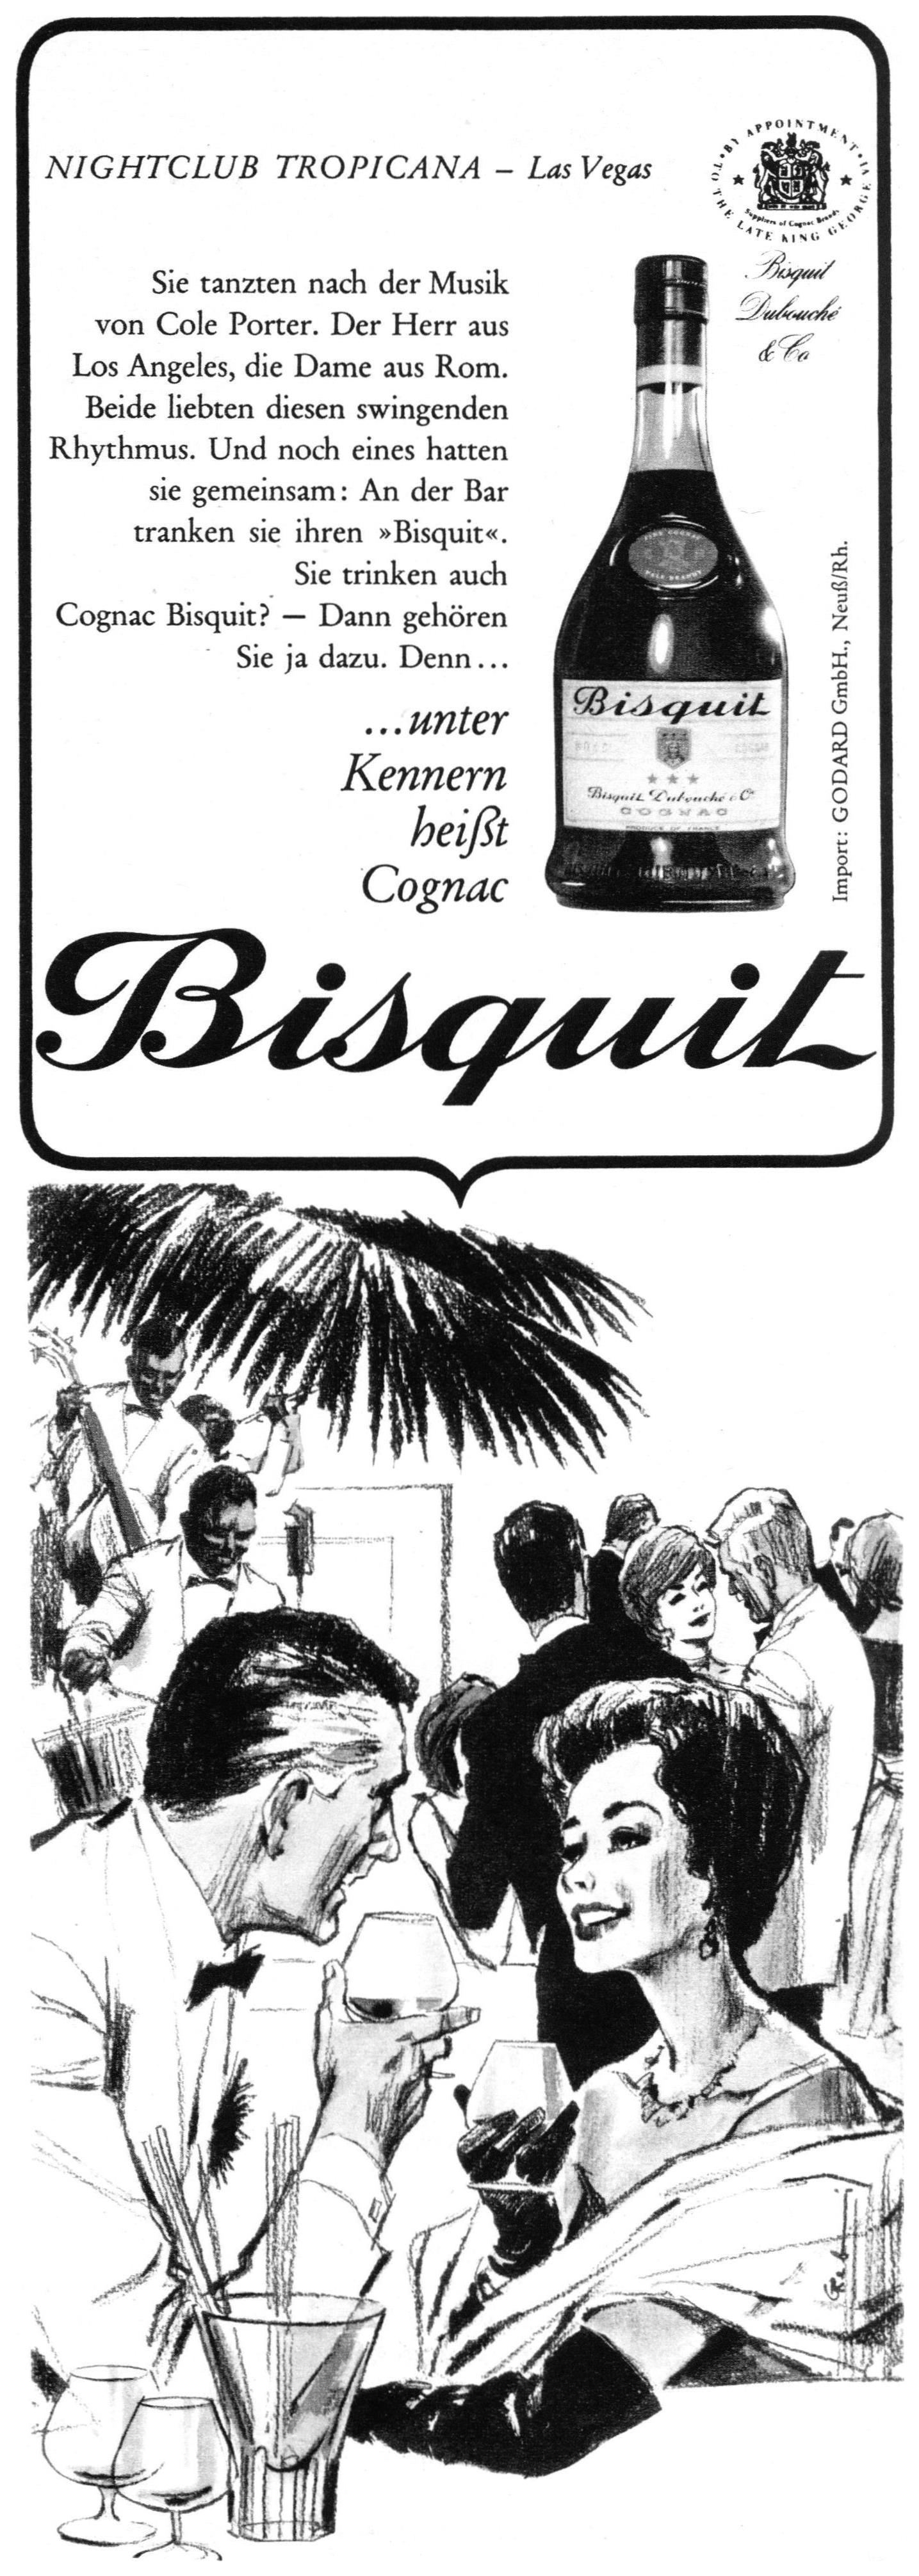 Bisquit 1964 0.jpg